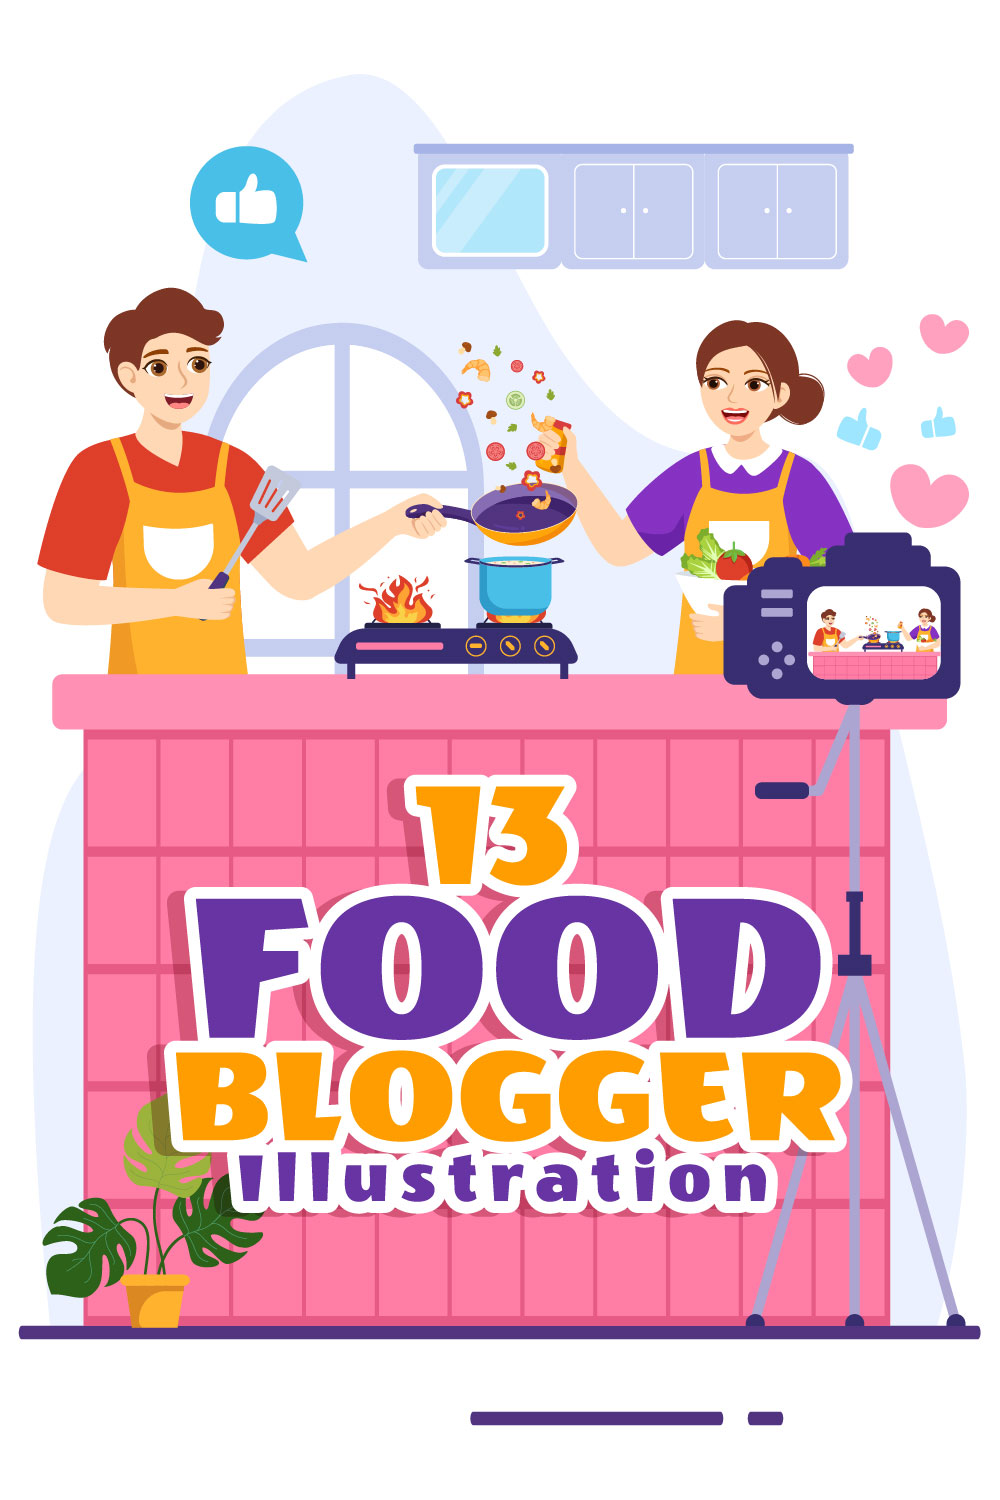 13 Food Blogger Vector Illustration pinterest preview image.